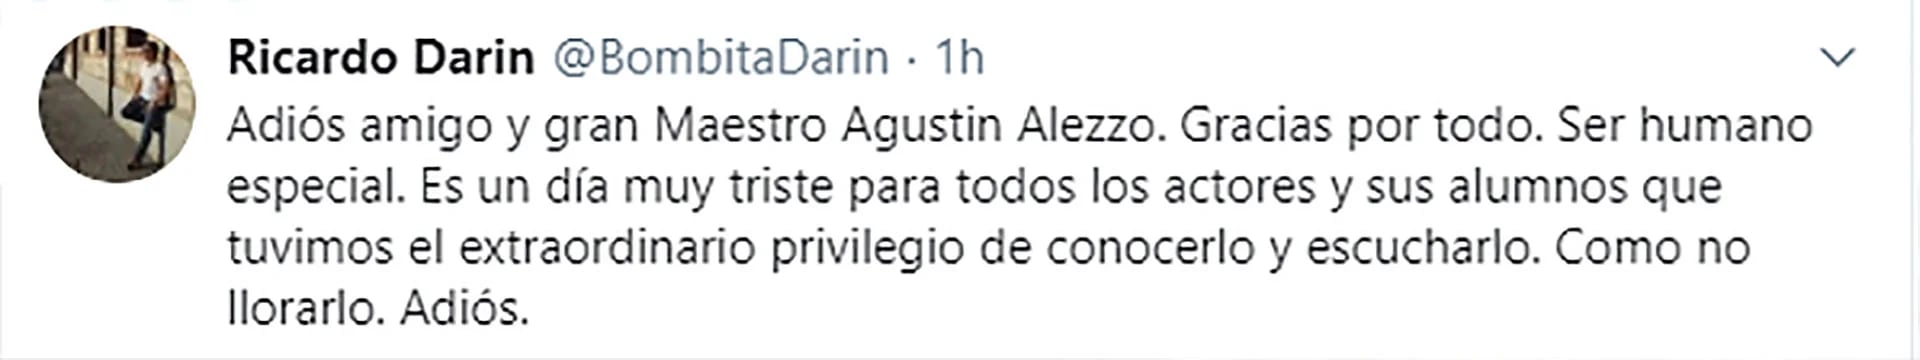 El tuit de Ricardo Darín